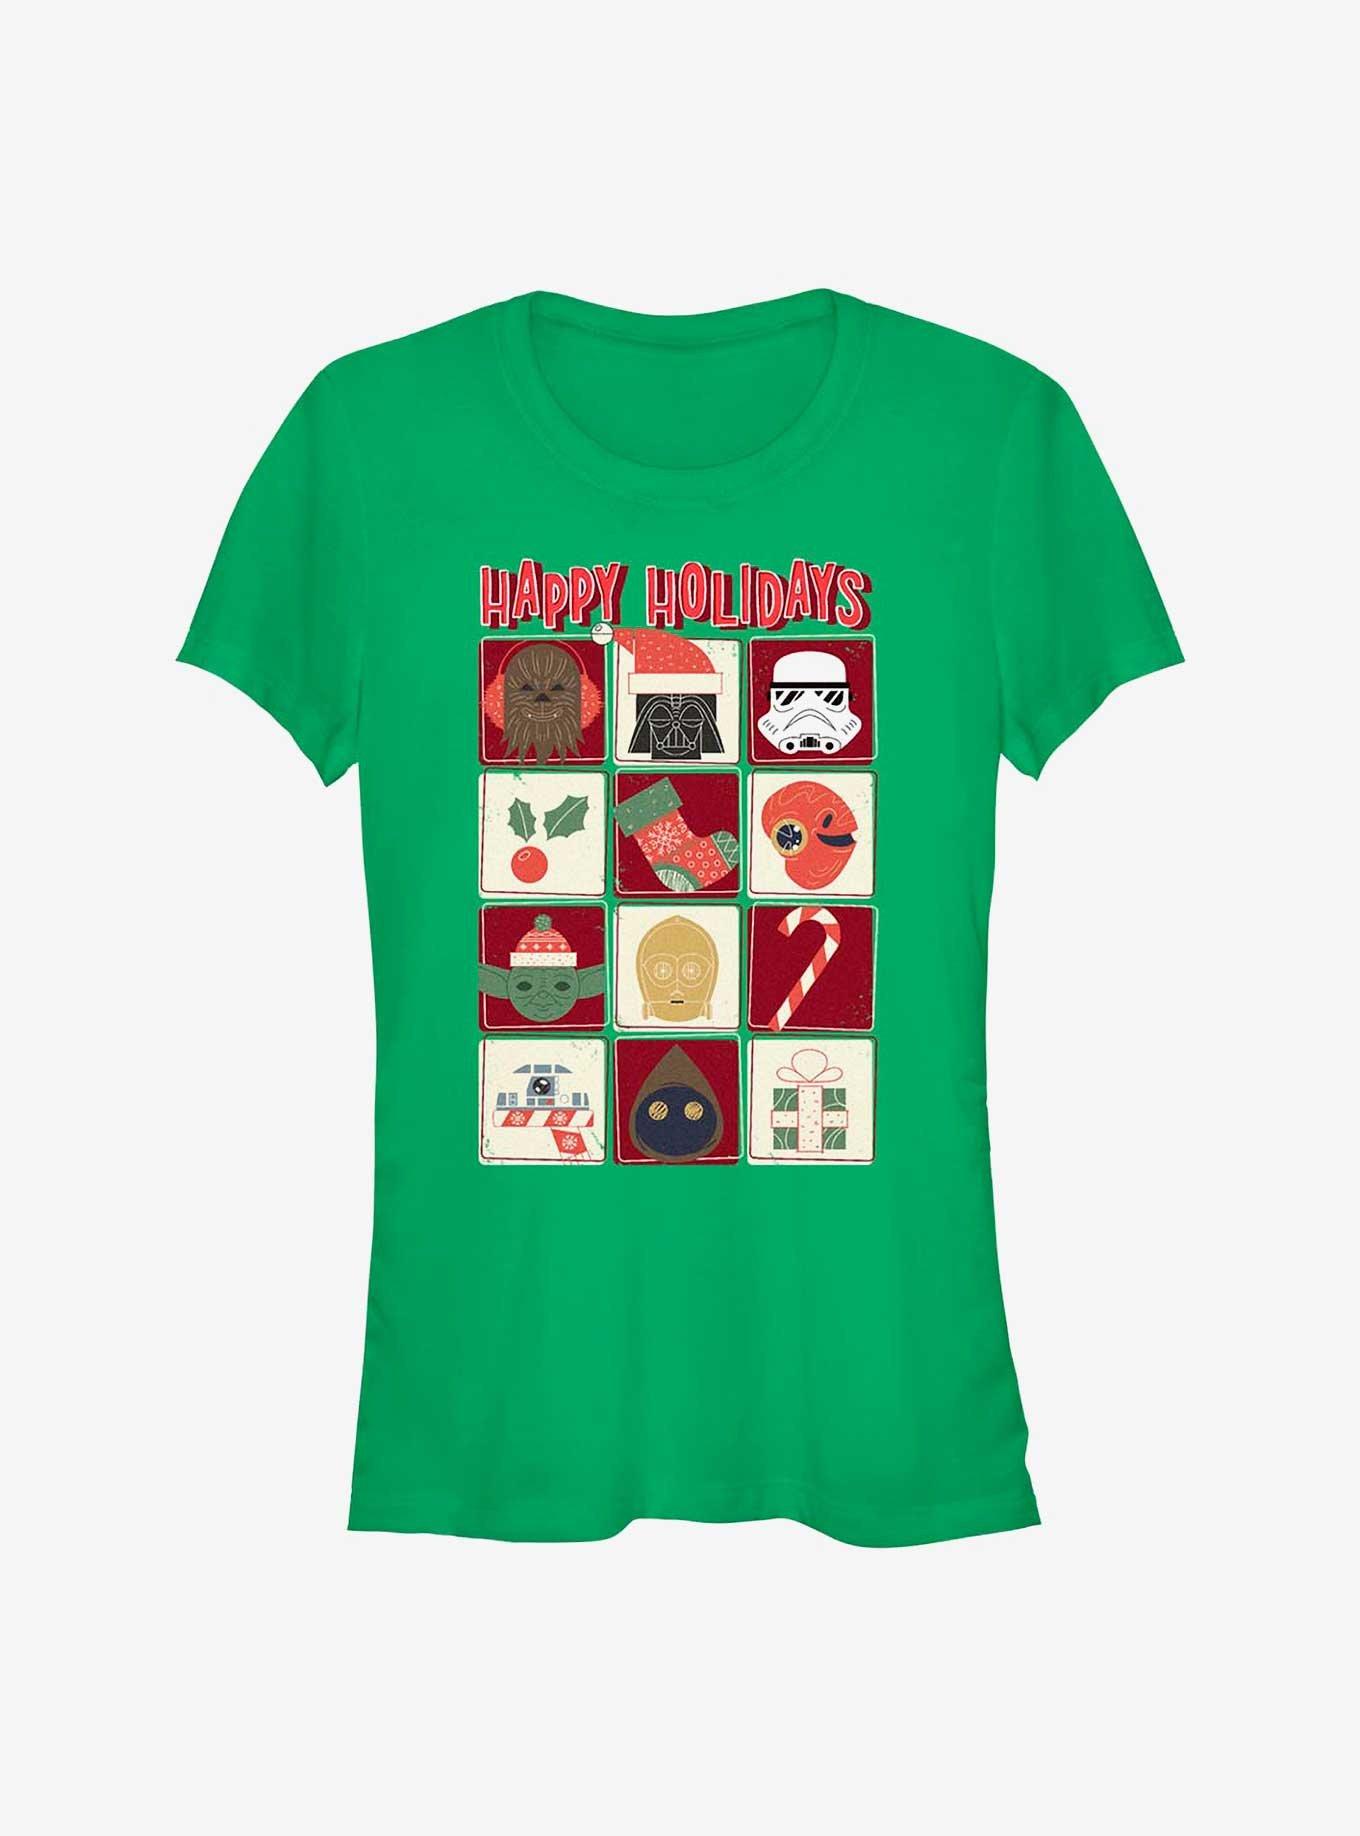 Star Wars Holiday Icons Girls T-Shirt